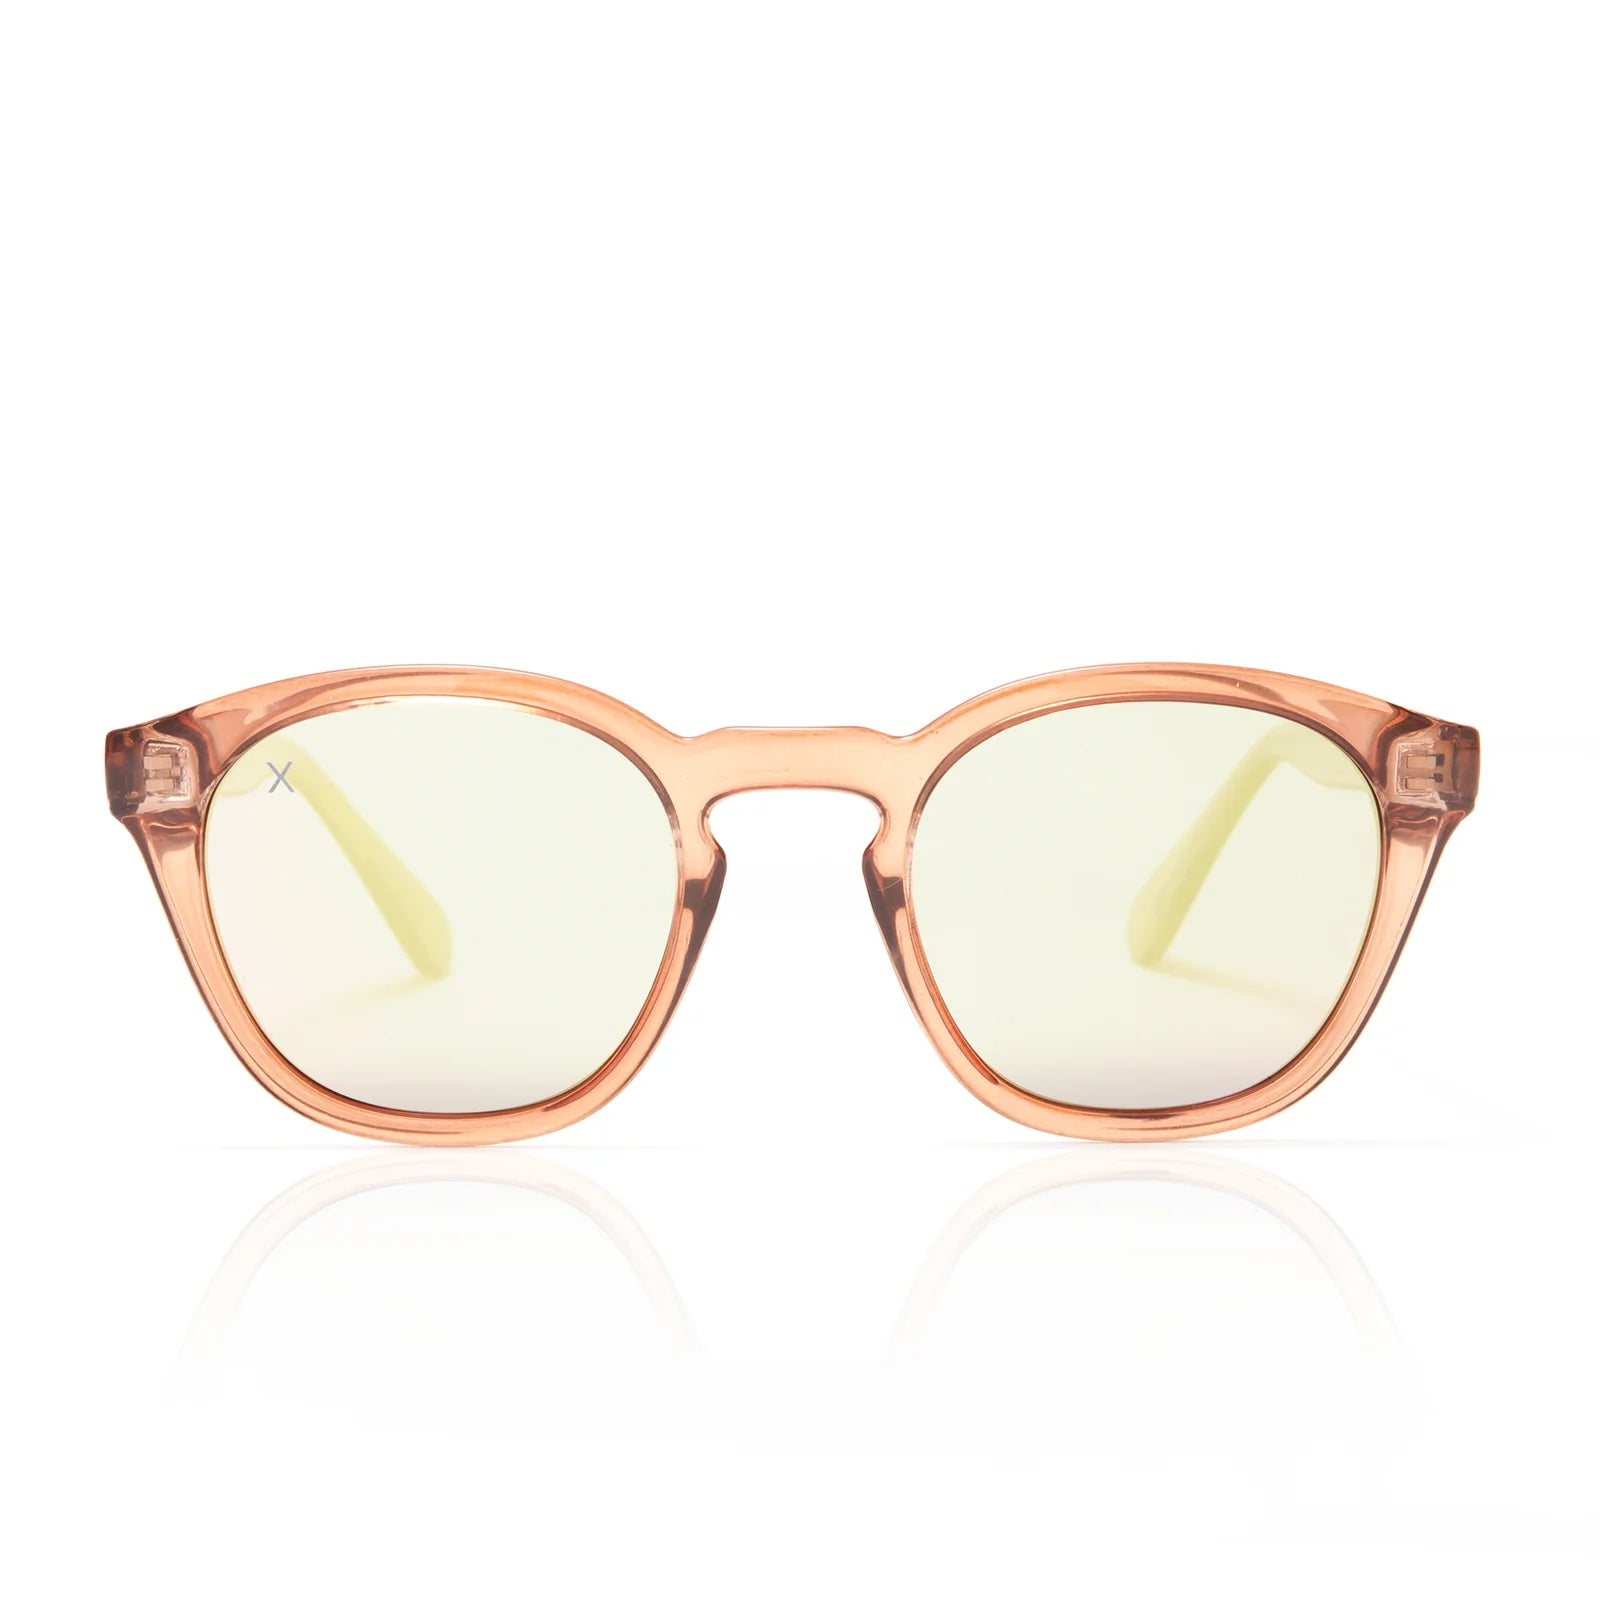 Larchmont polarized sunglasses